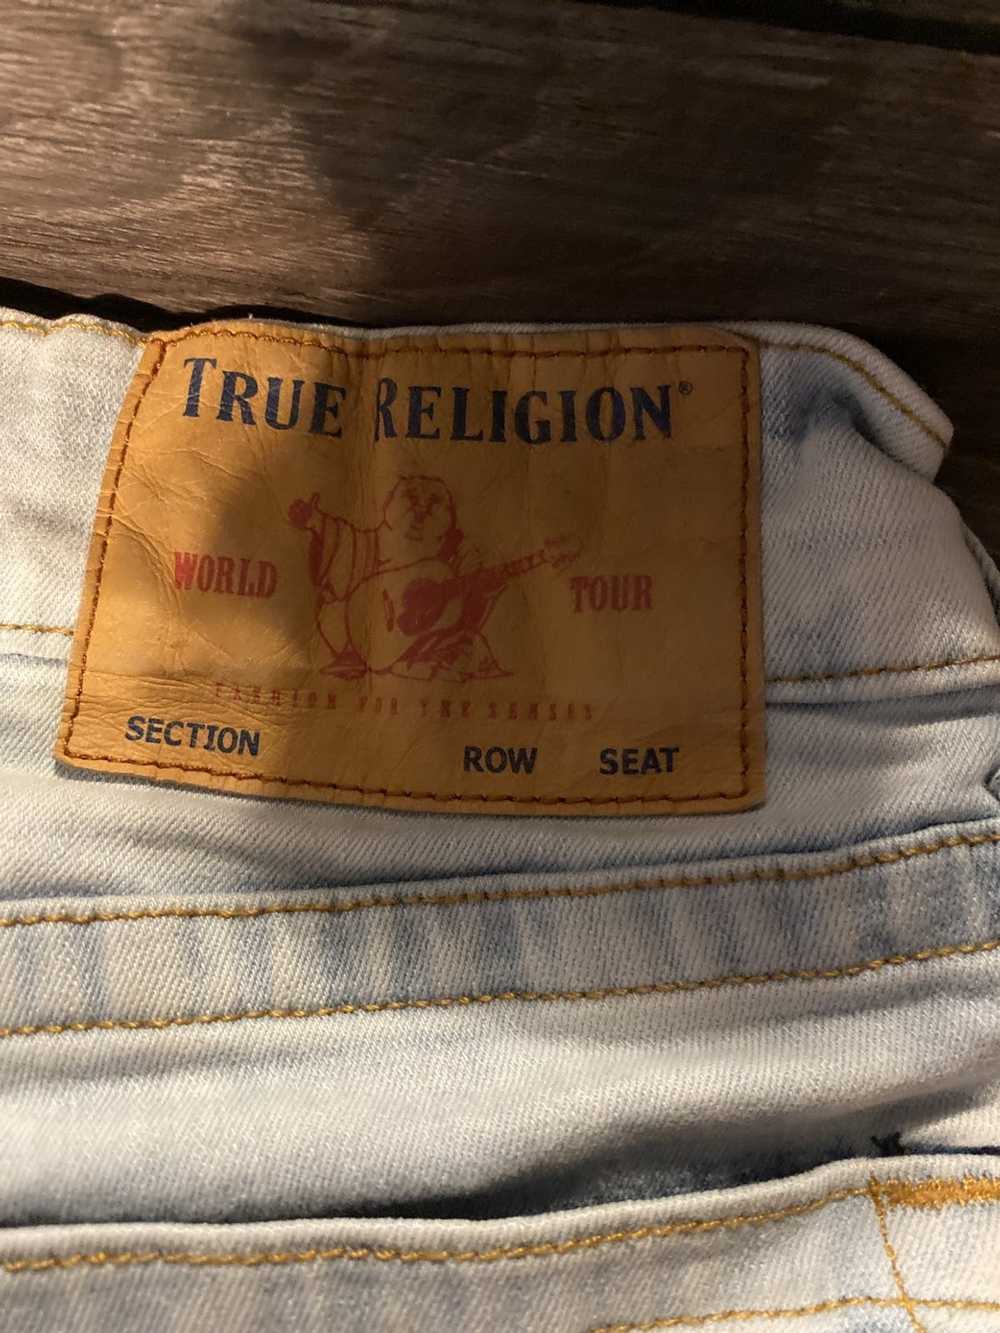 True Religion True Religion Jeans - image 5